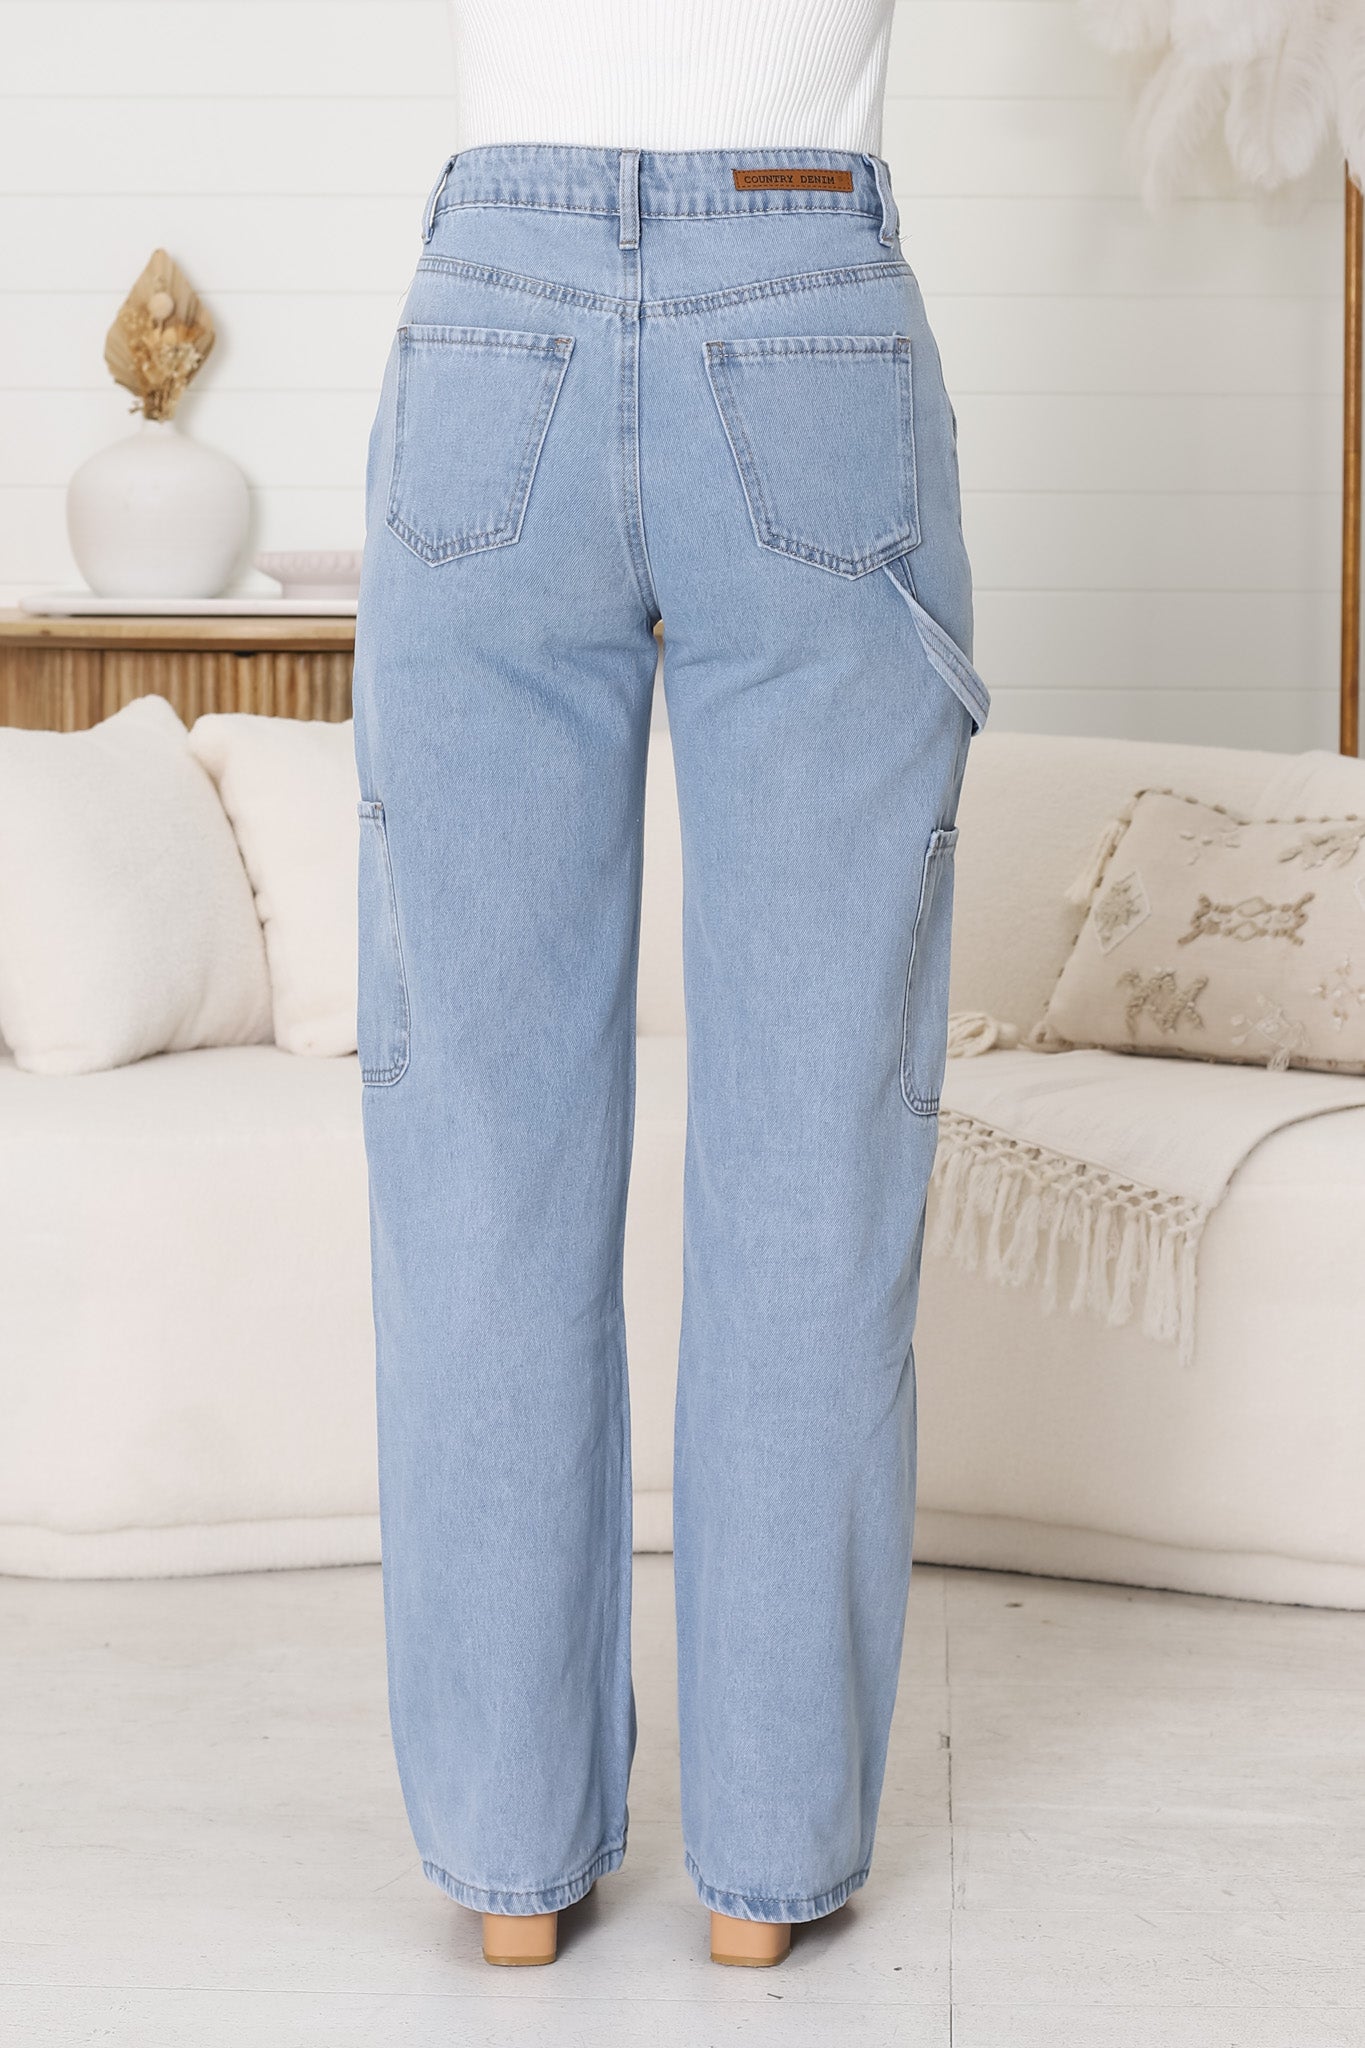 Chakra Cargo Pants - Straight Leg High Waist Cargo Jeans in Light Denim